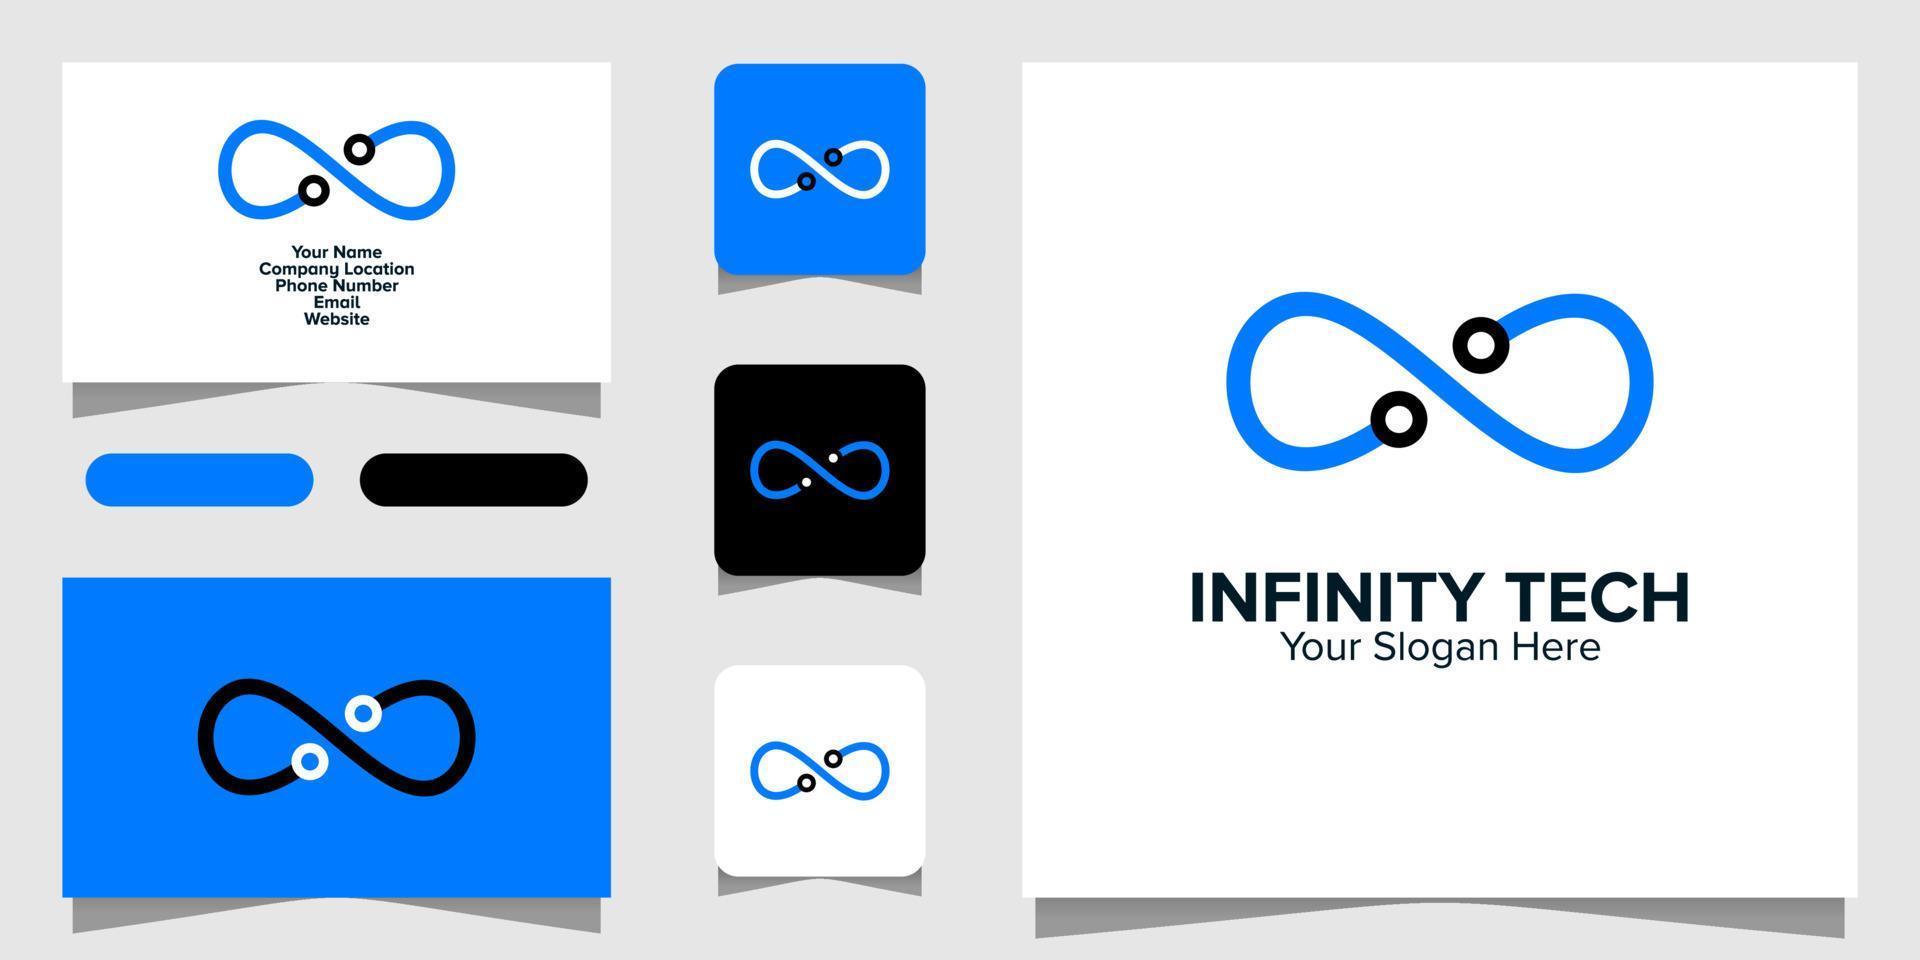 Illustrationsvektorgrafik des Logos der Infinity-Technologie und der Visitenkarte vektor